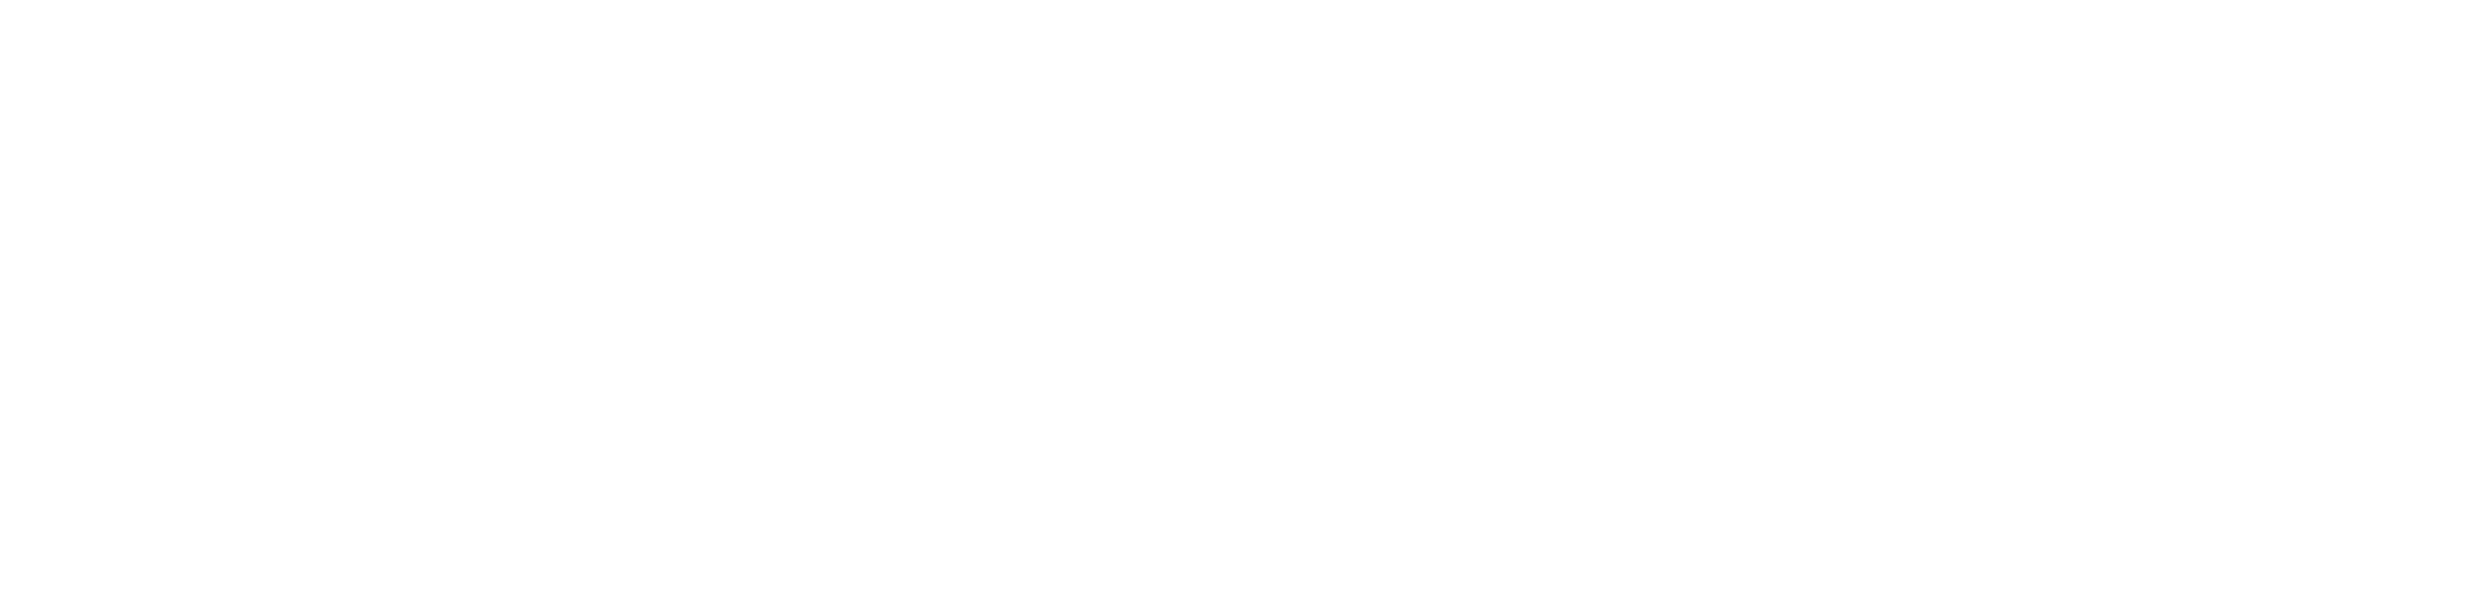 Caroline Mondo Cleaning Services logo